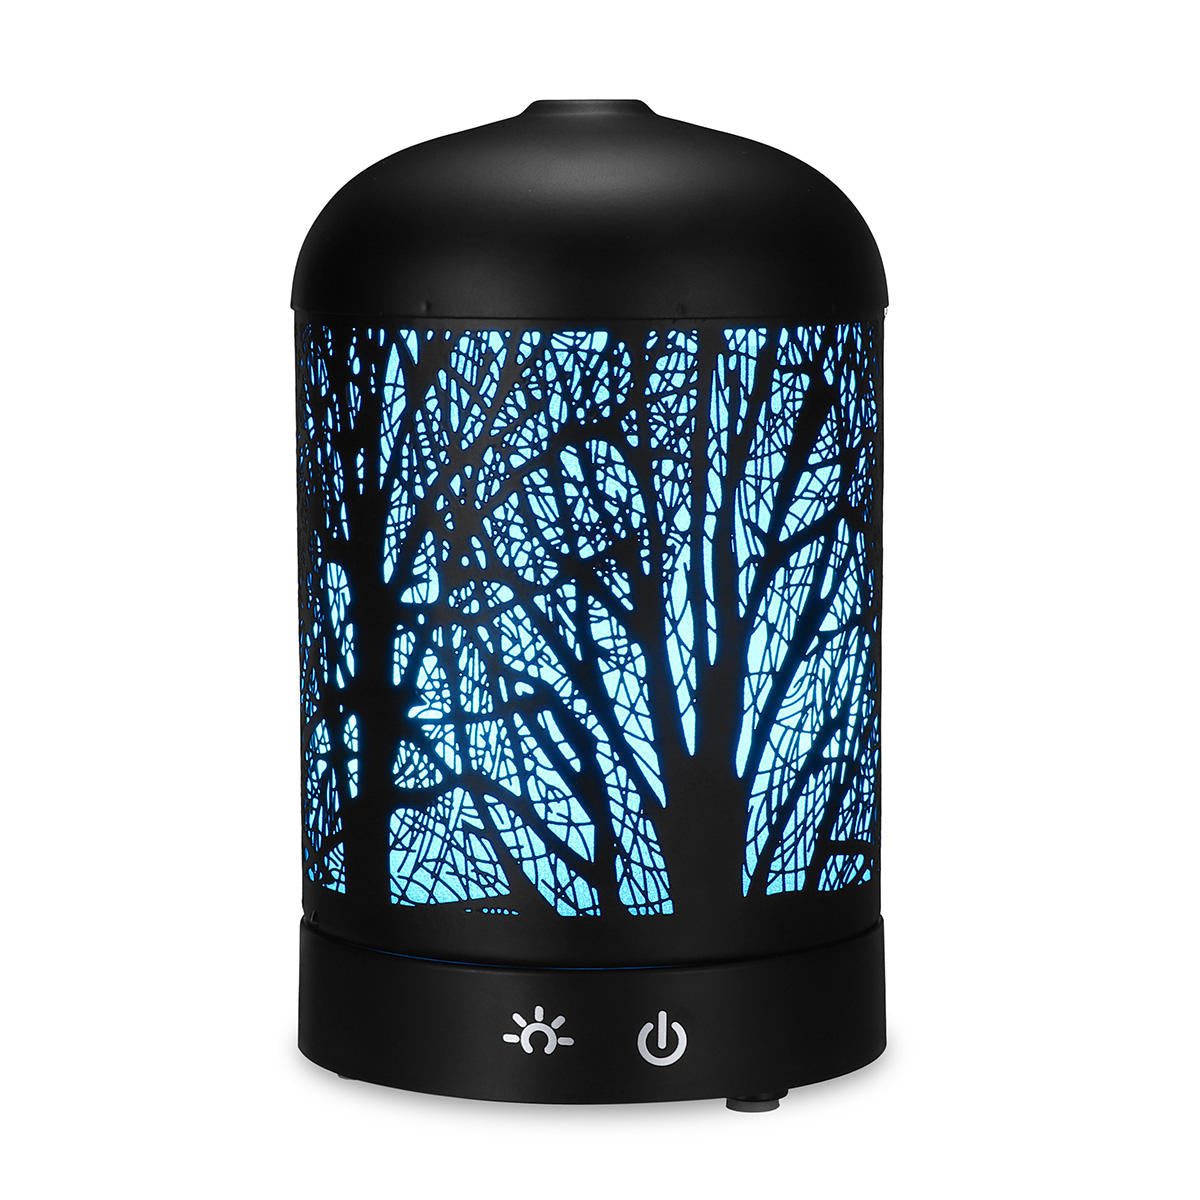 160ml Iron Art Humidifier Quiet Air Aroma Essential Oil Diffuser Aromatherapy Atomizer